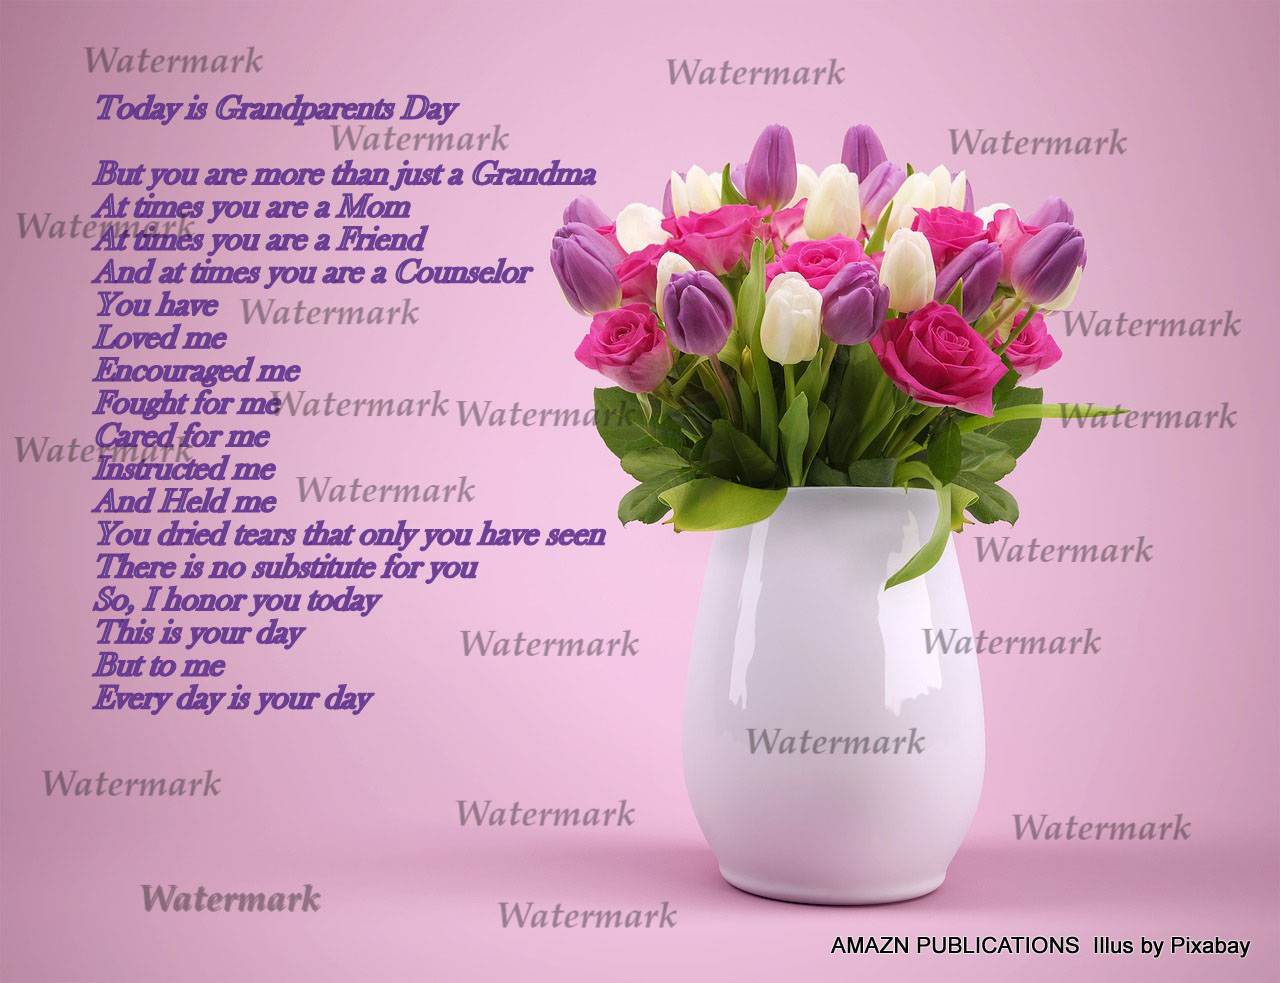 Happy Grandparents Day2